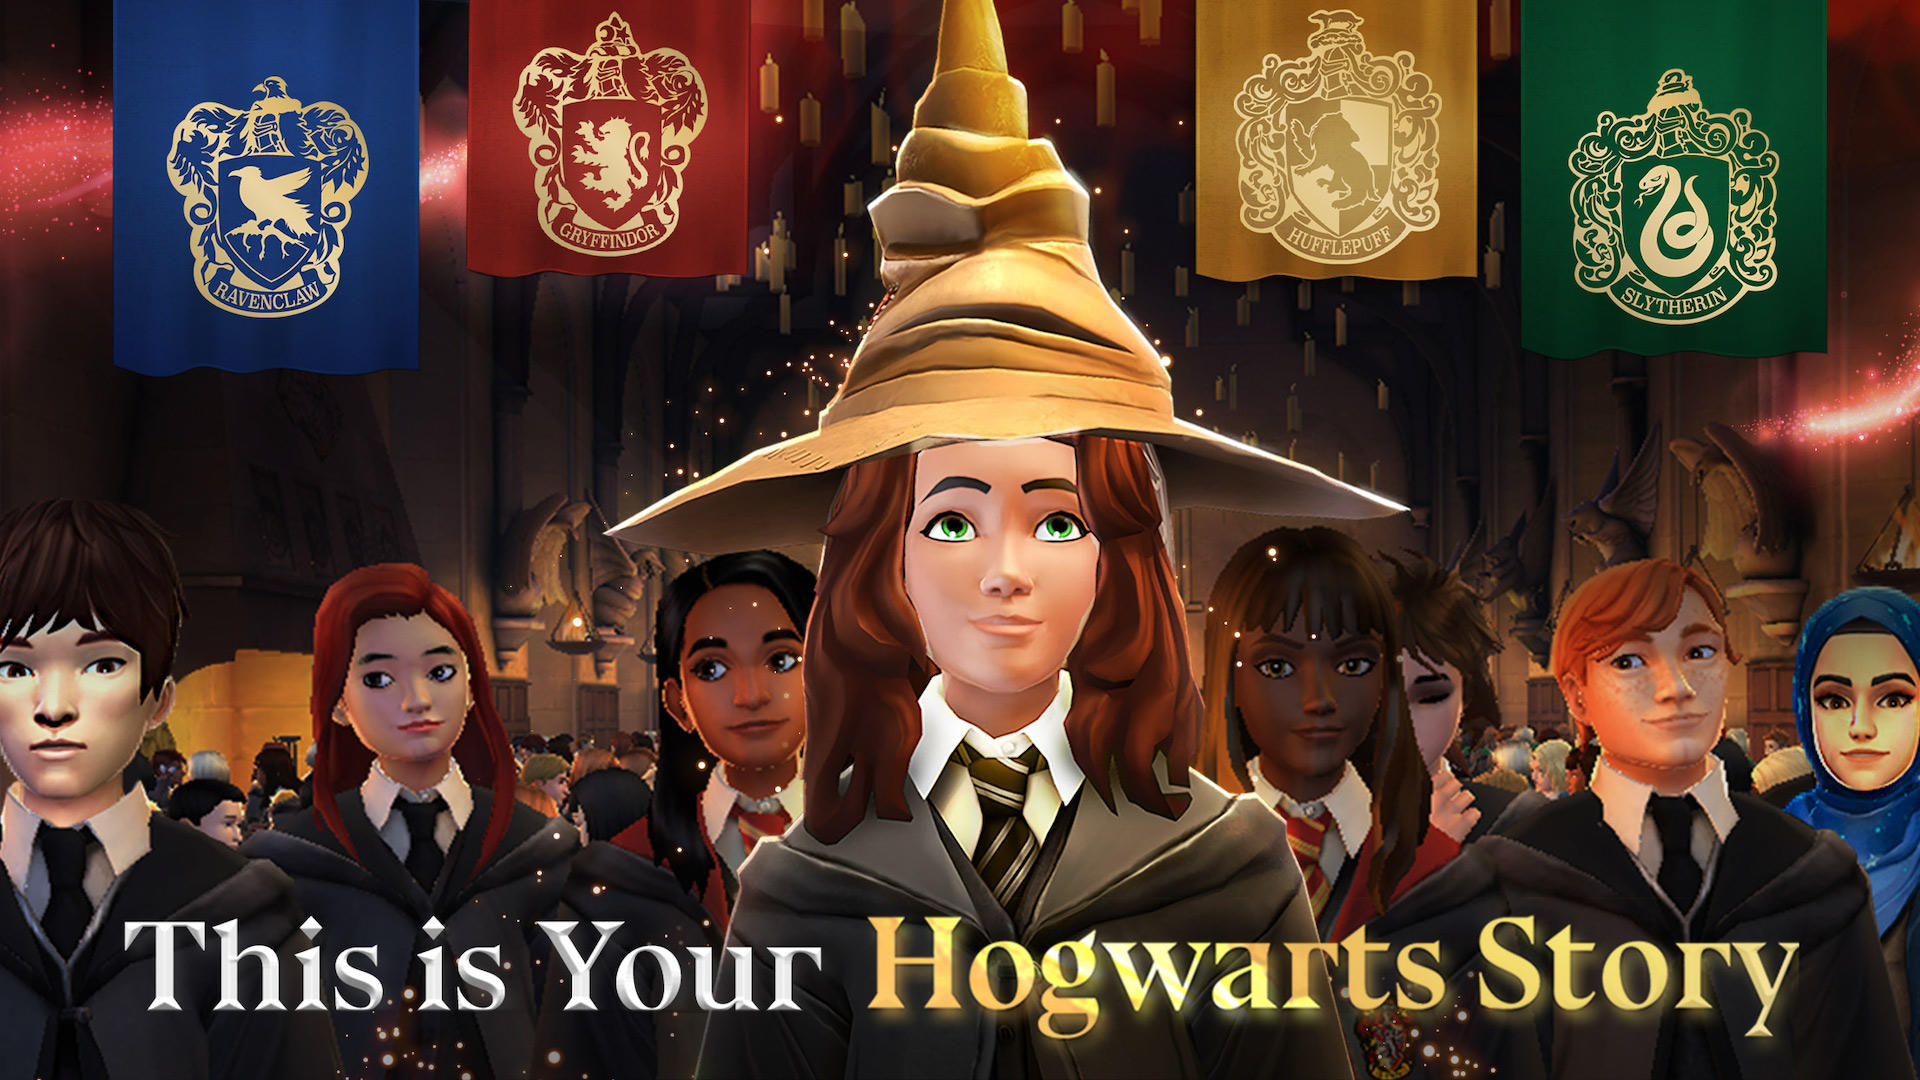 Screenshot 1 of ဟယ်ရီပေါ်တာ- Hogwarts လျှို့ဝှက်ဆန်းကြယ် 5.8.0